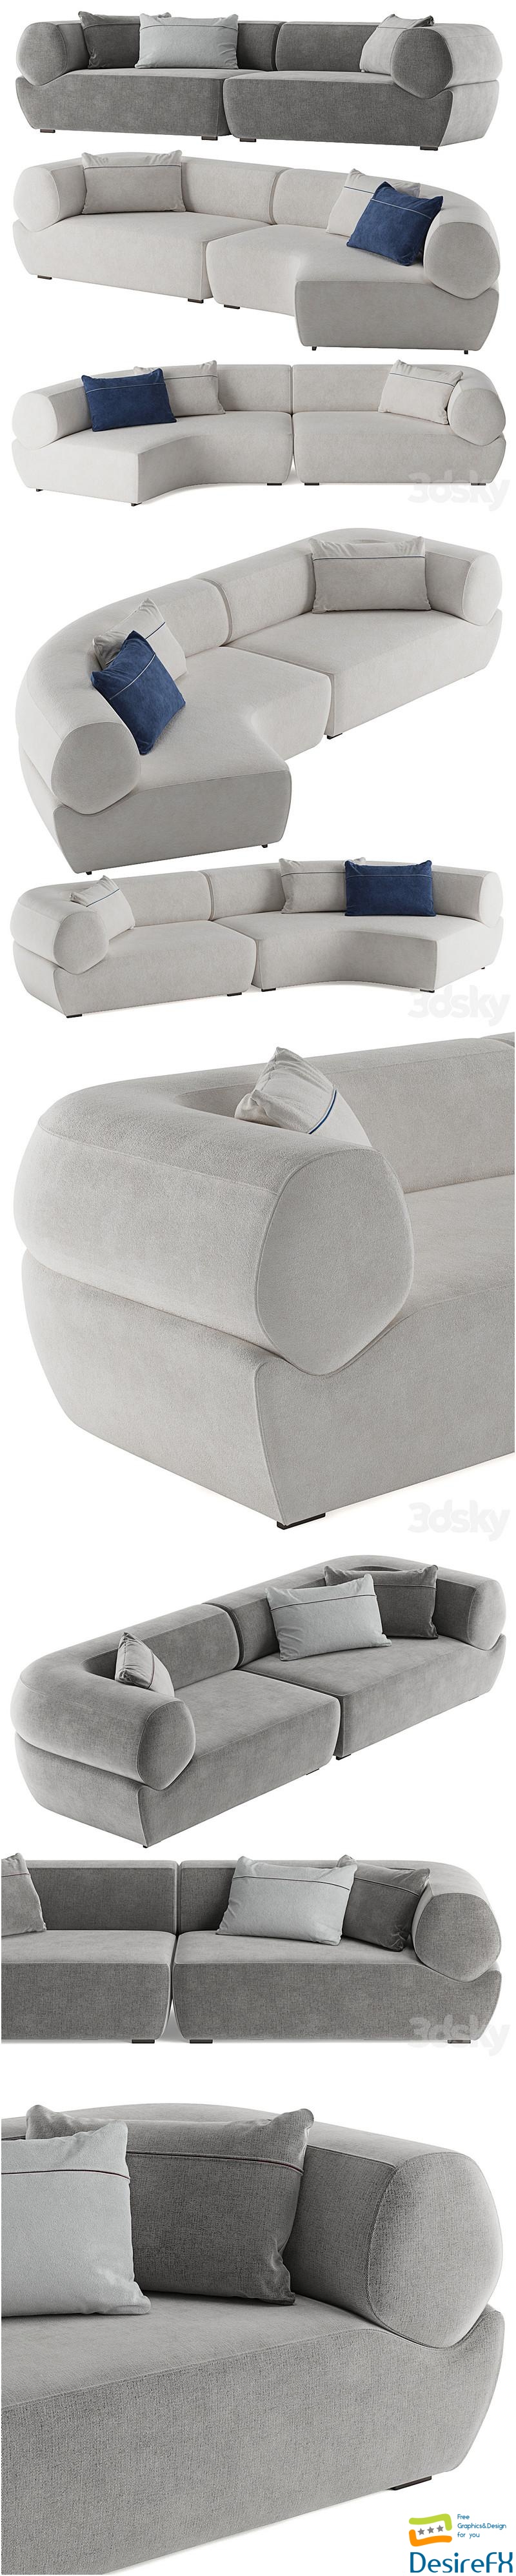 Download B&B italia Naviglio sofa 3D Model - DesireFX.COM